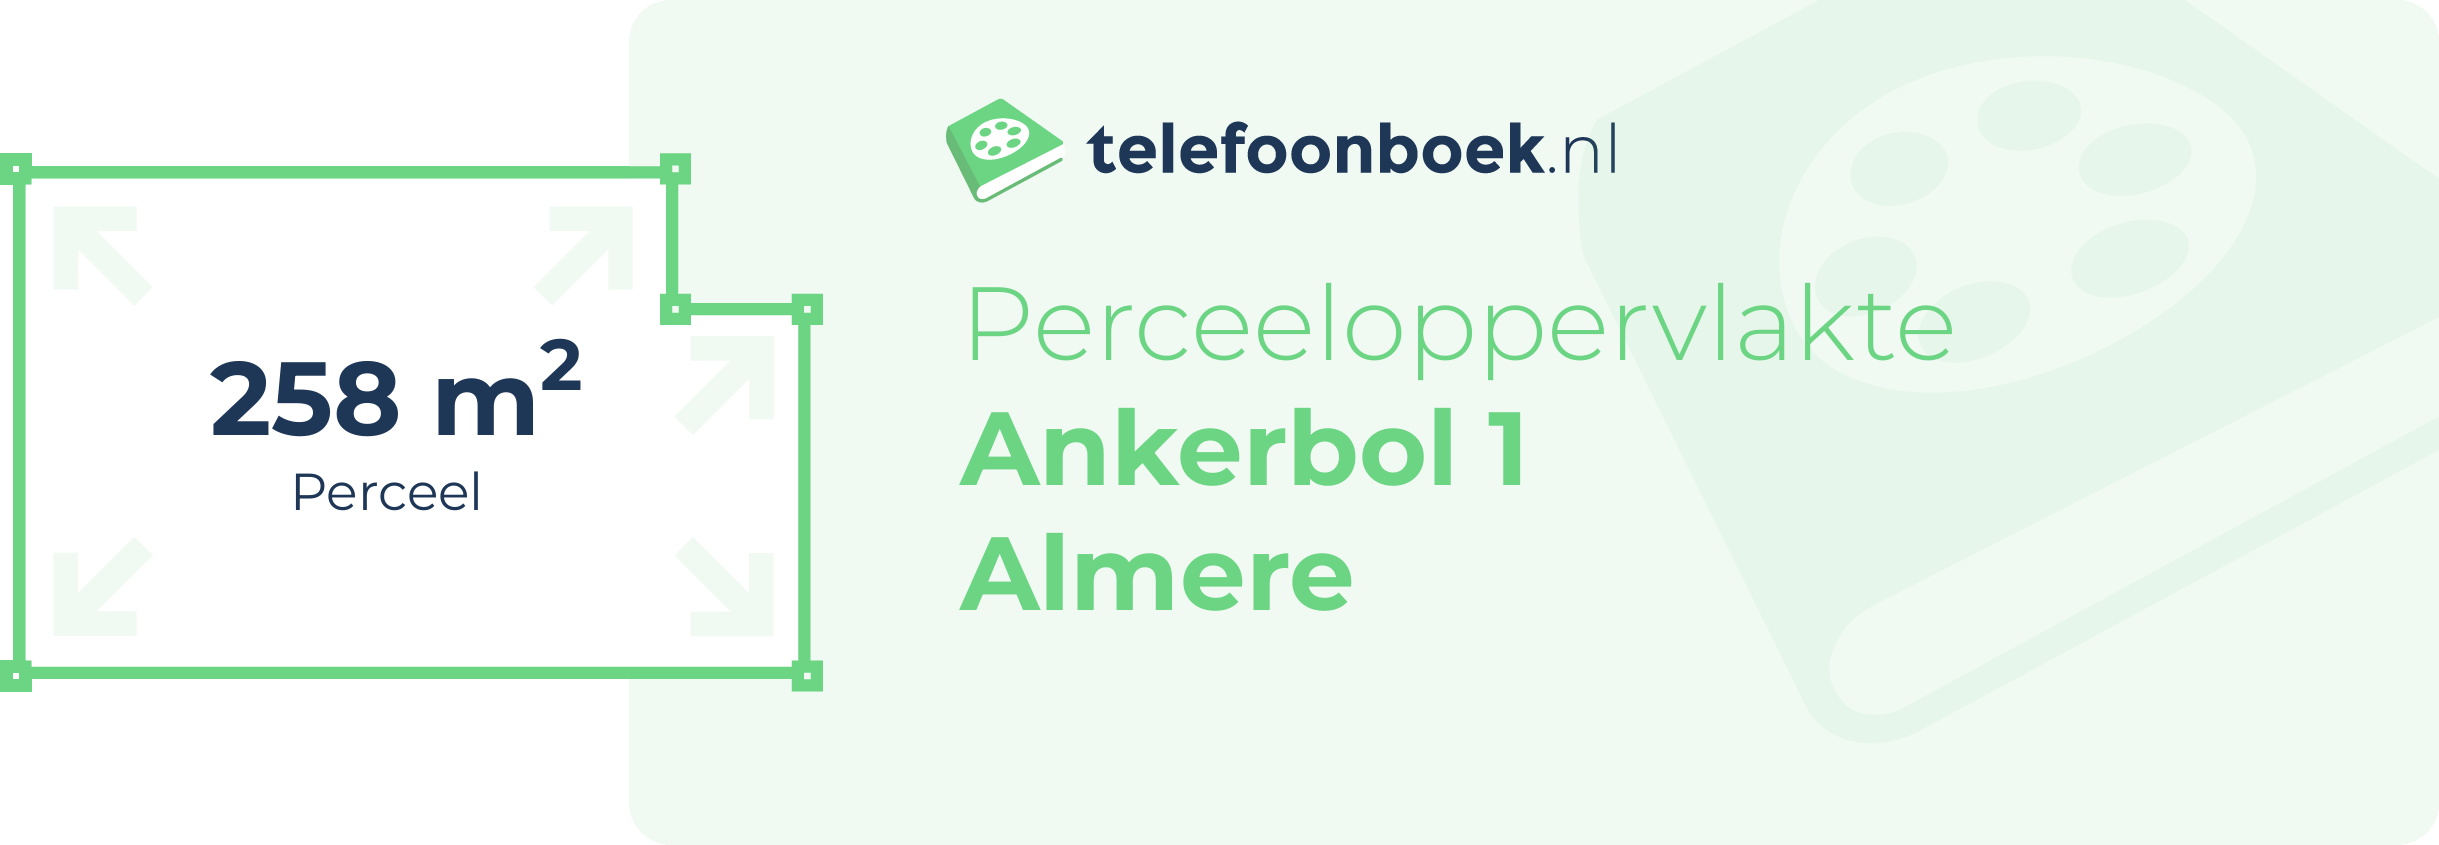 Perceeloppervlakte Ankerbol 1 Almere